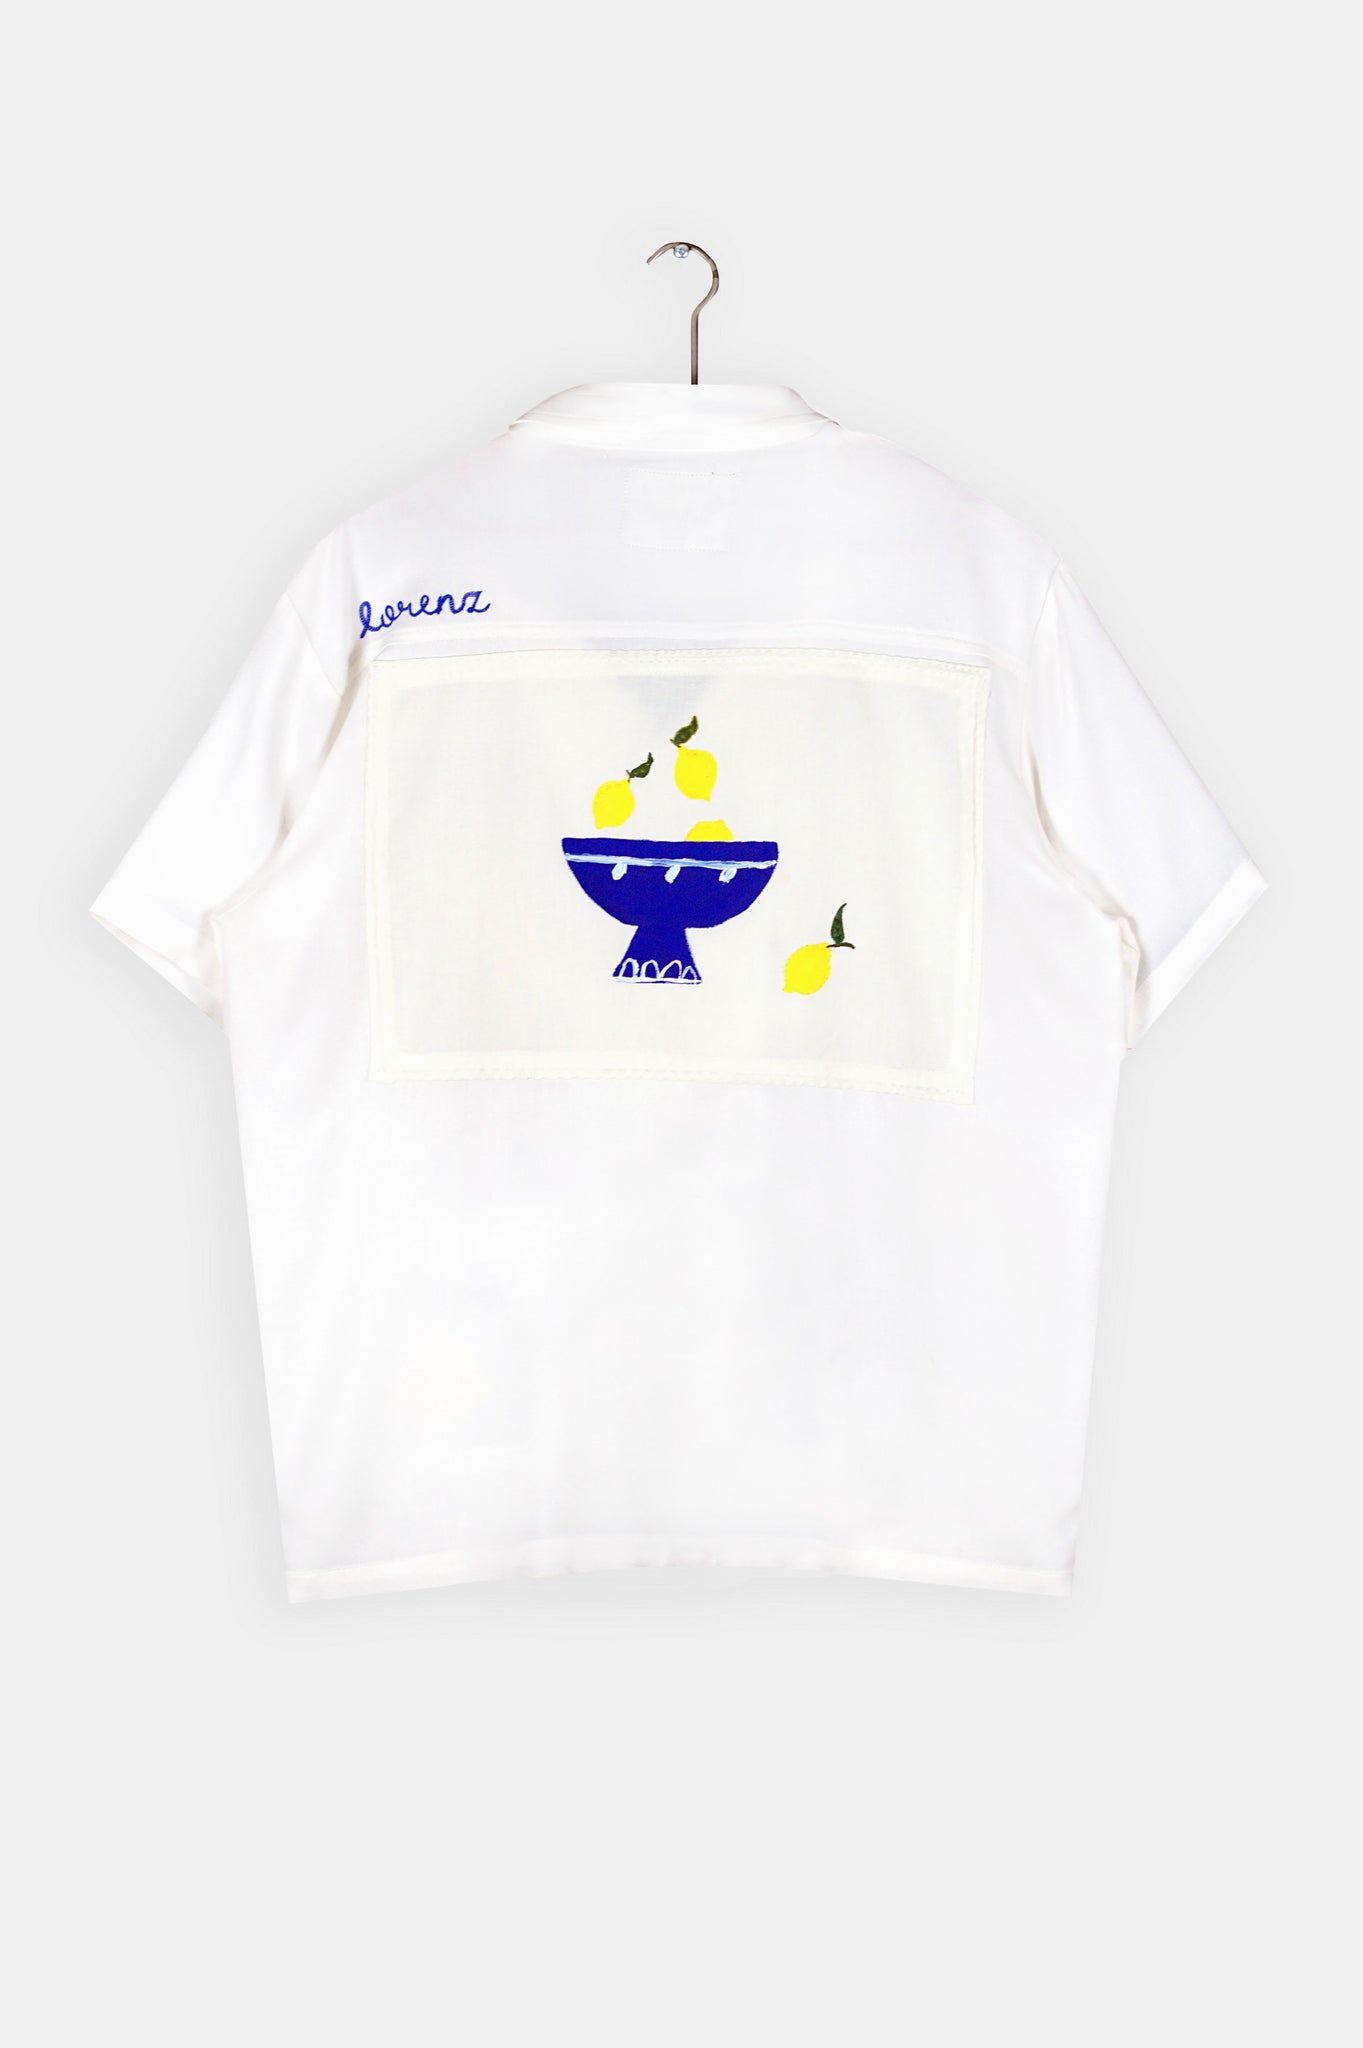 Frankie Thorp x lorenz Shirt 7 - lorenz Menswear